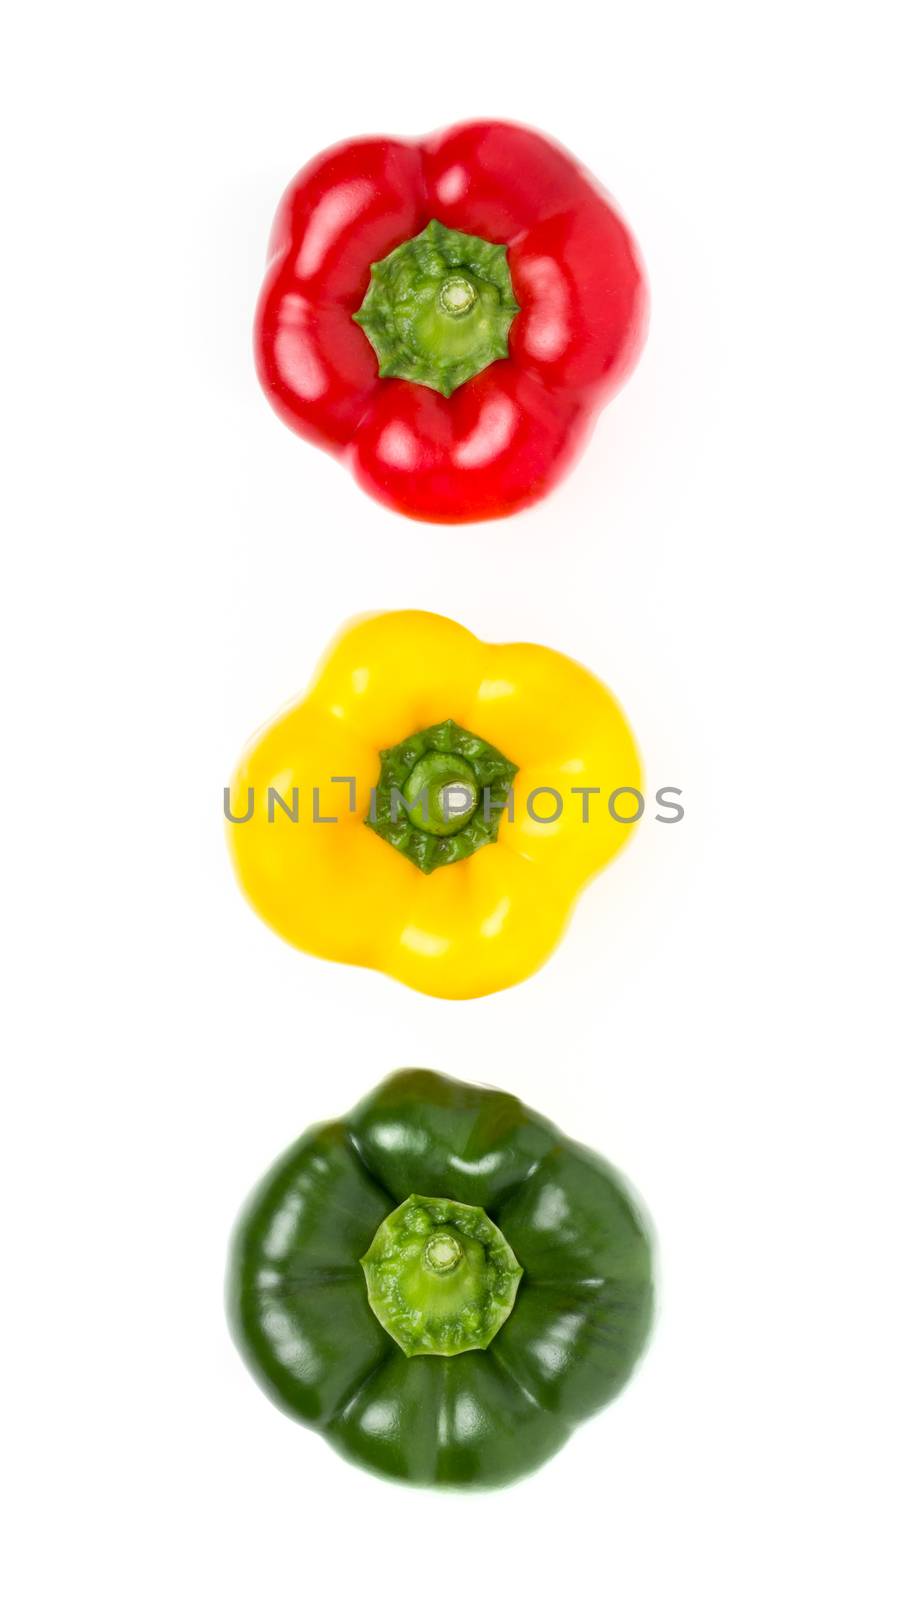 Traffic lights peppers by germanopoli